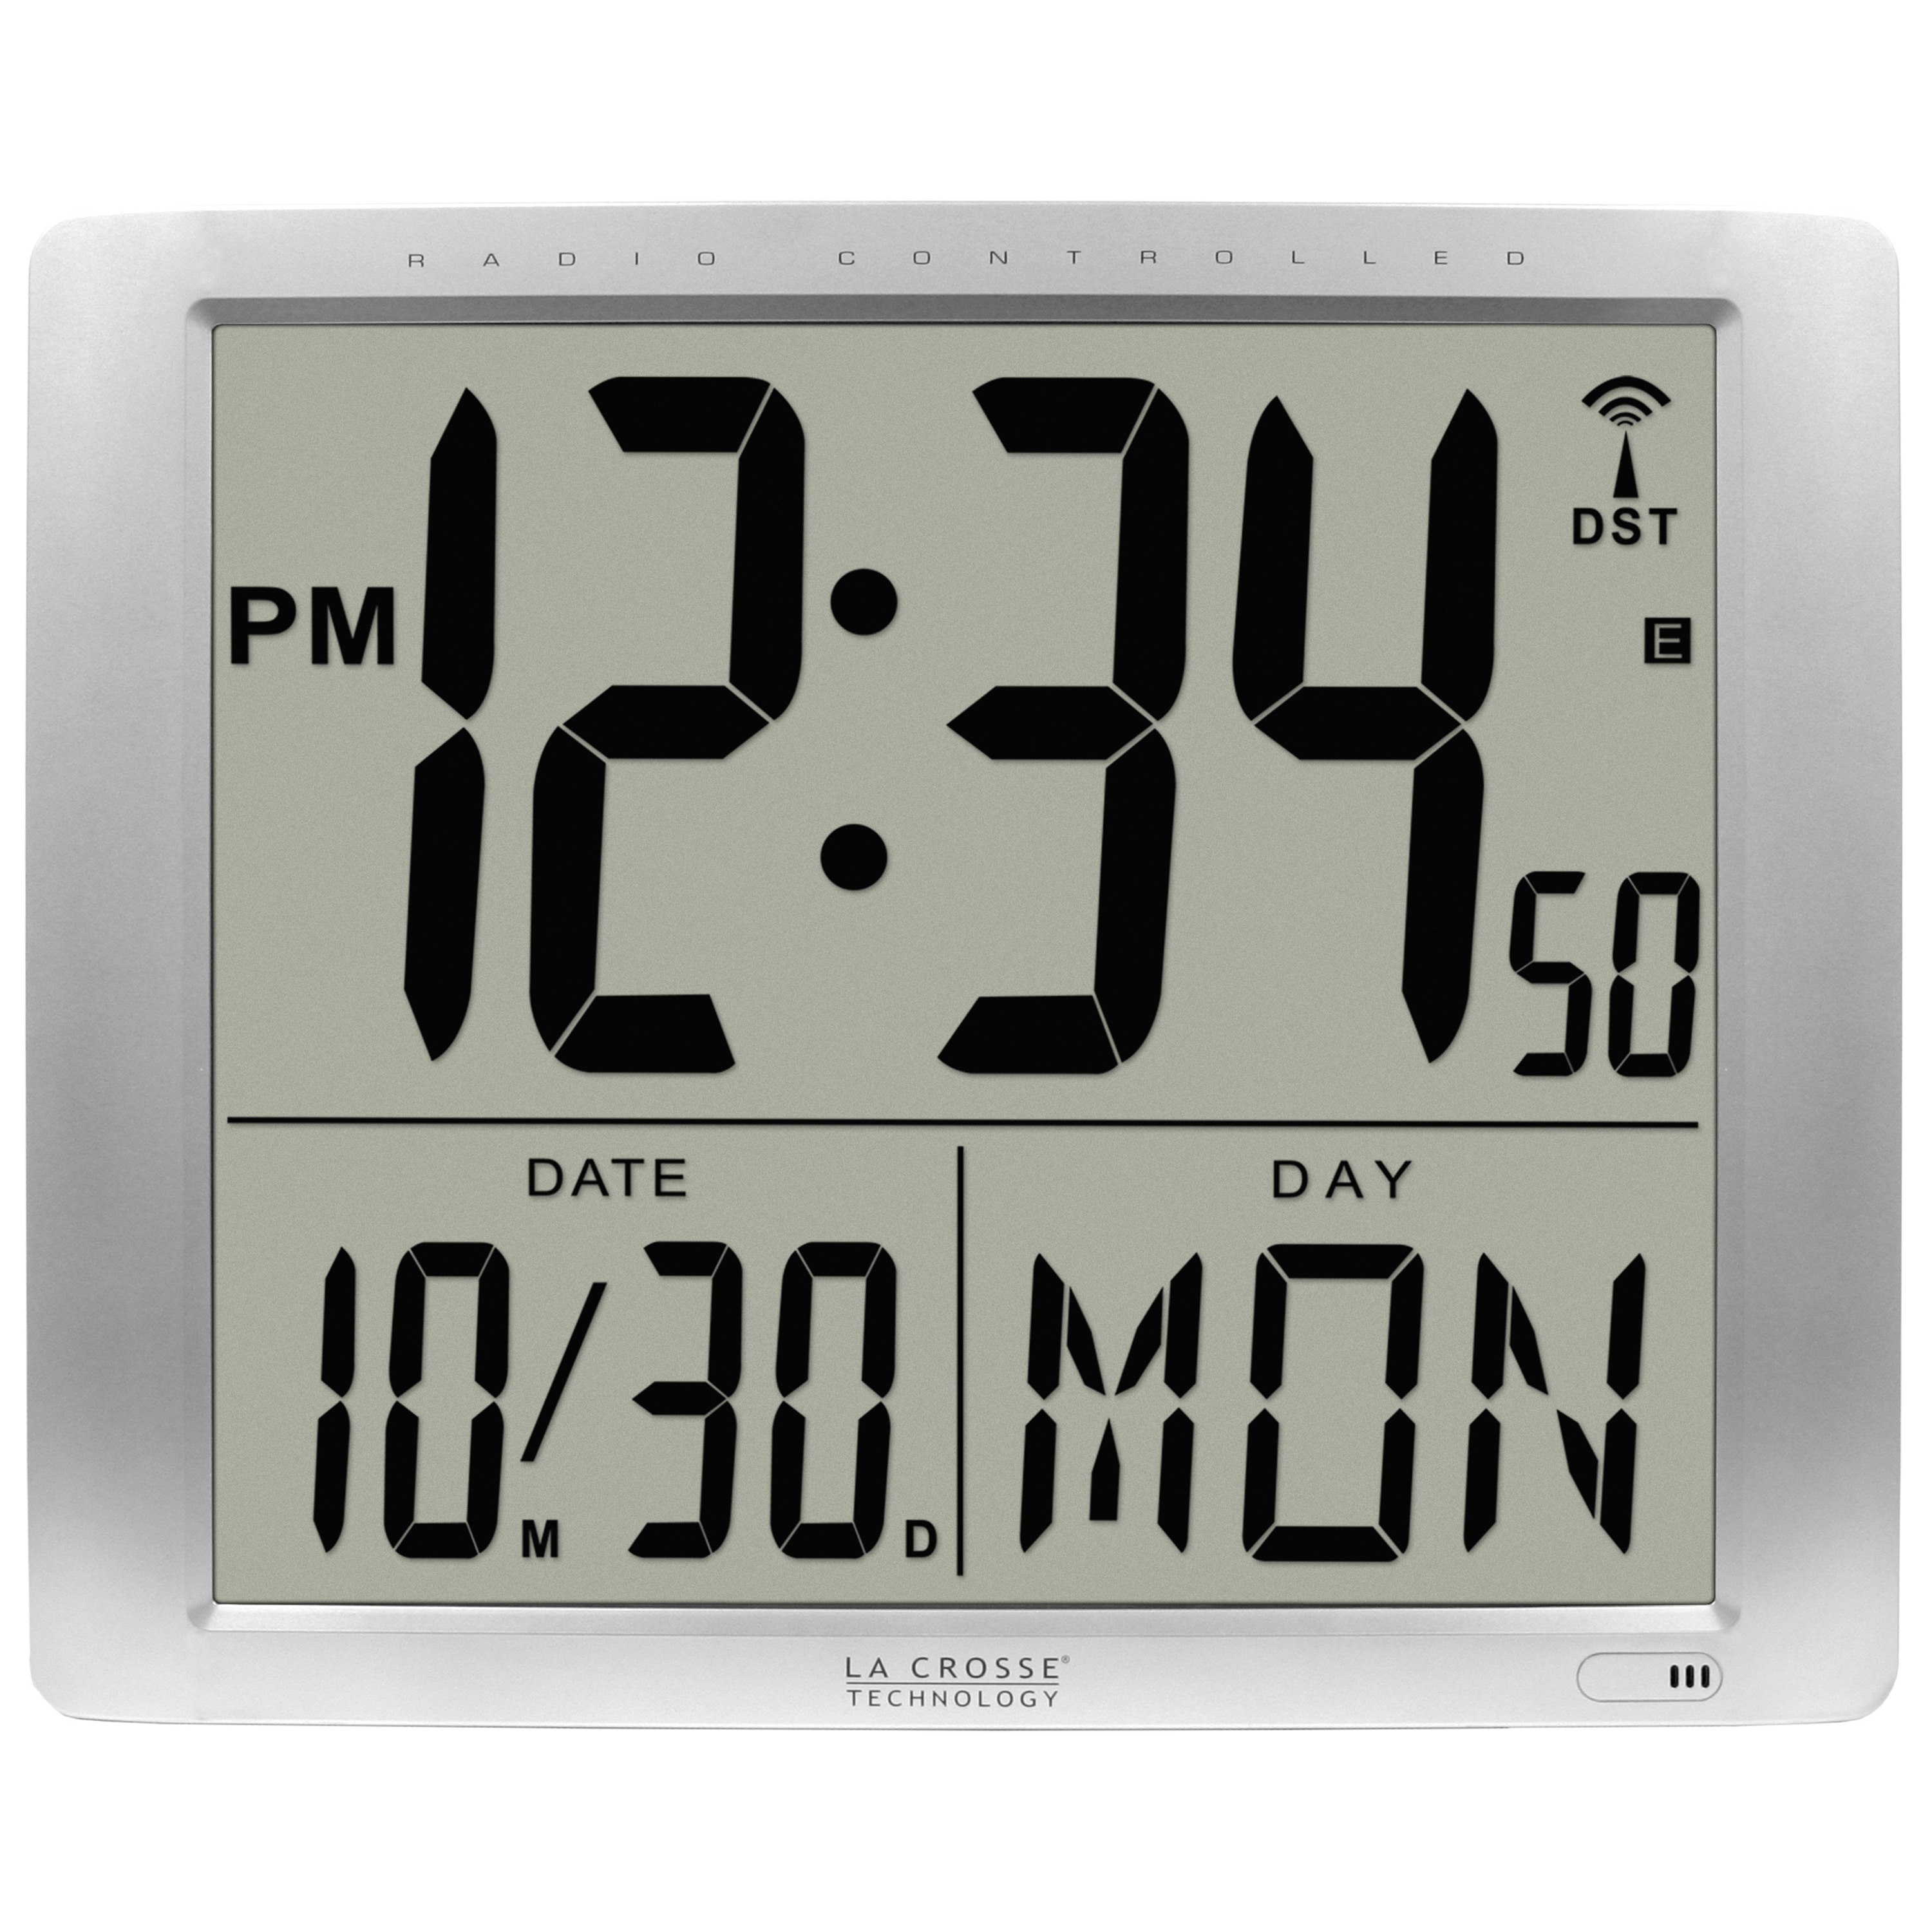 e digital clock